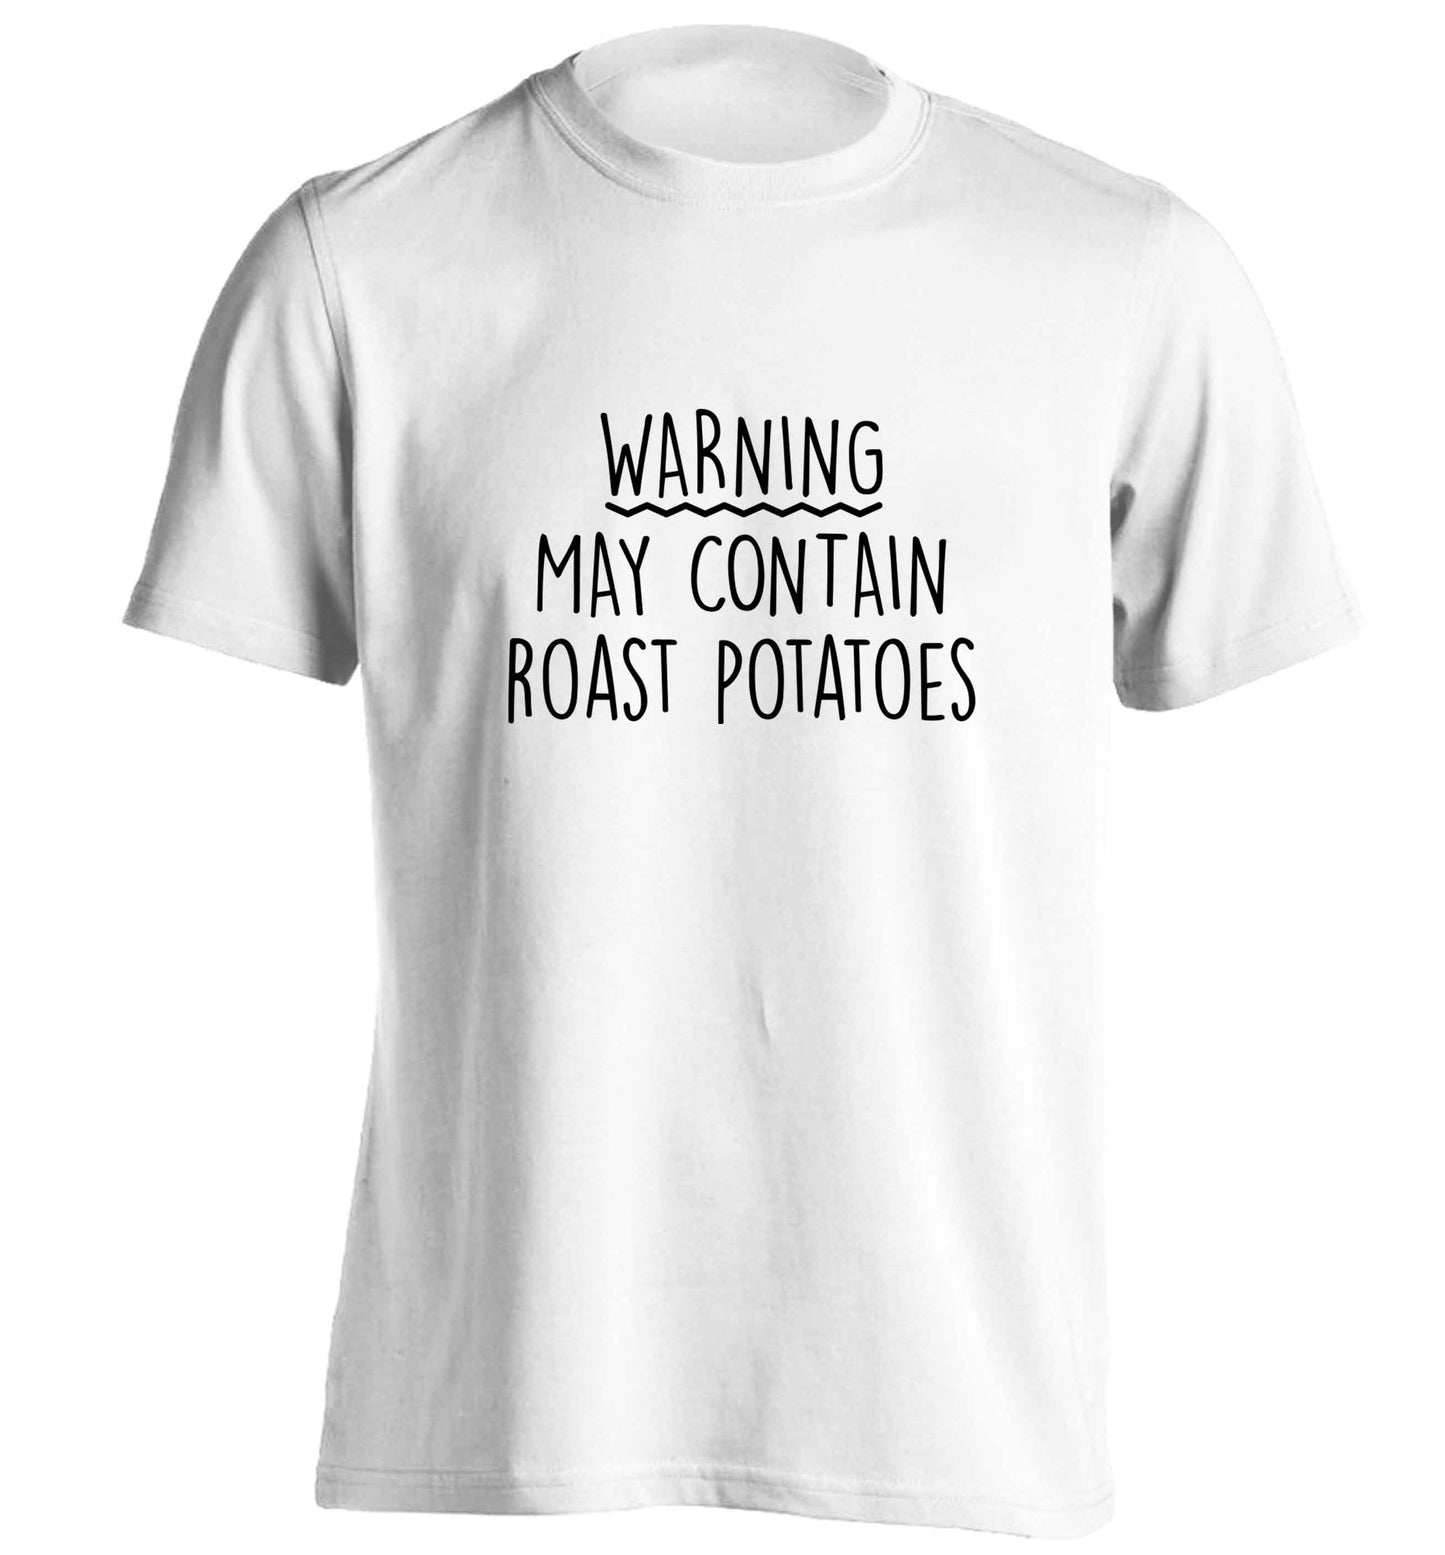 Warning may containg roast potatoes adults unisex white Tshirt 2XL